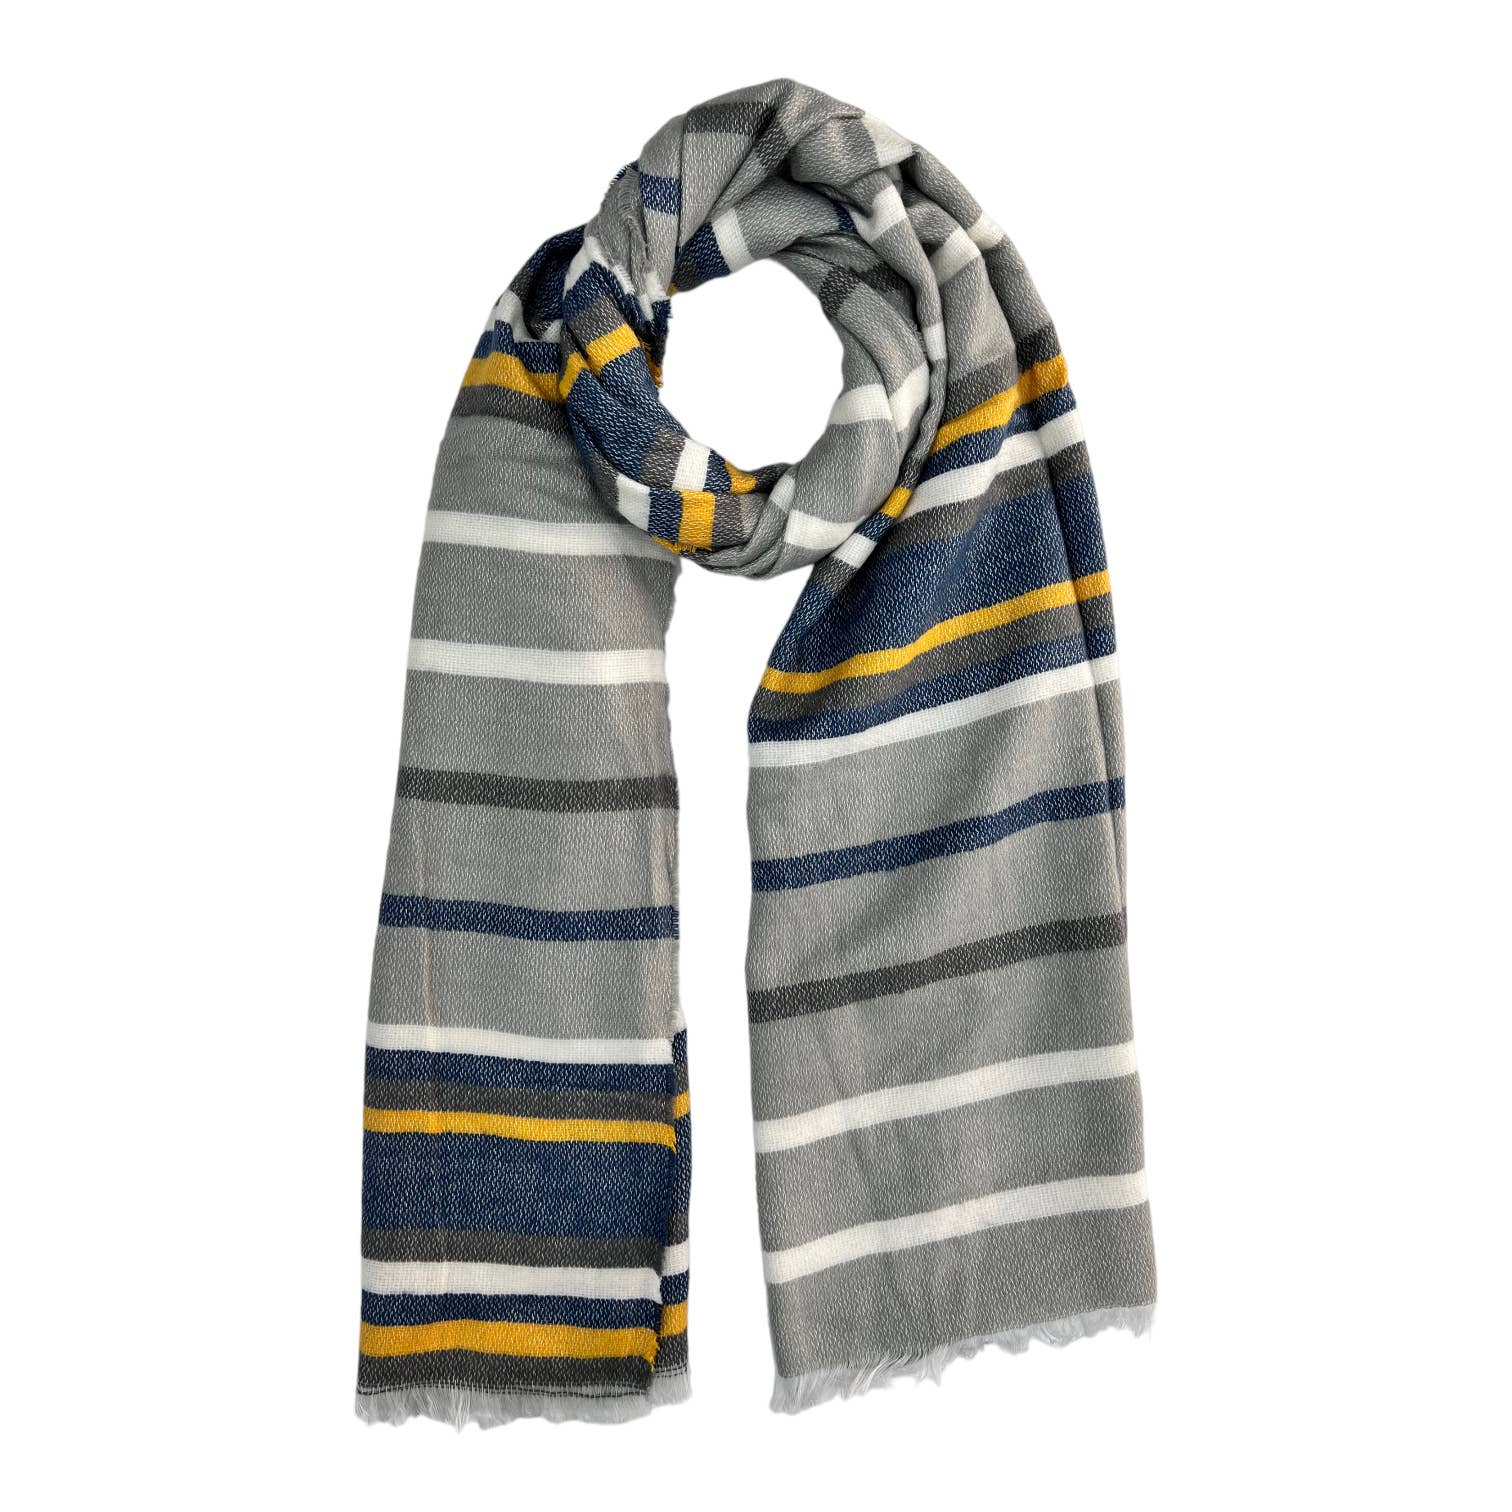 Striped winter scarf - The Nancy Smillie Shop - Art, Jewellery & Designer Gifts Glasgow